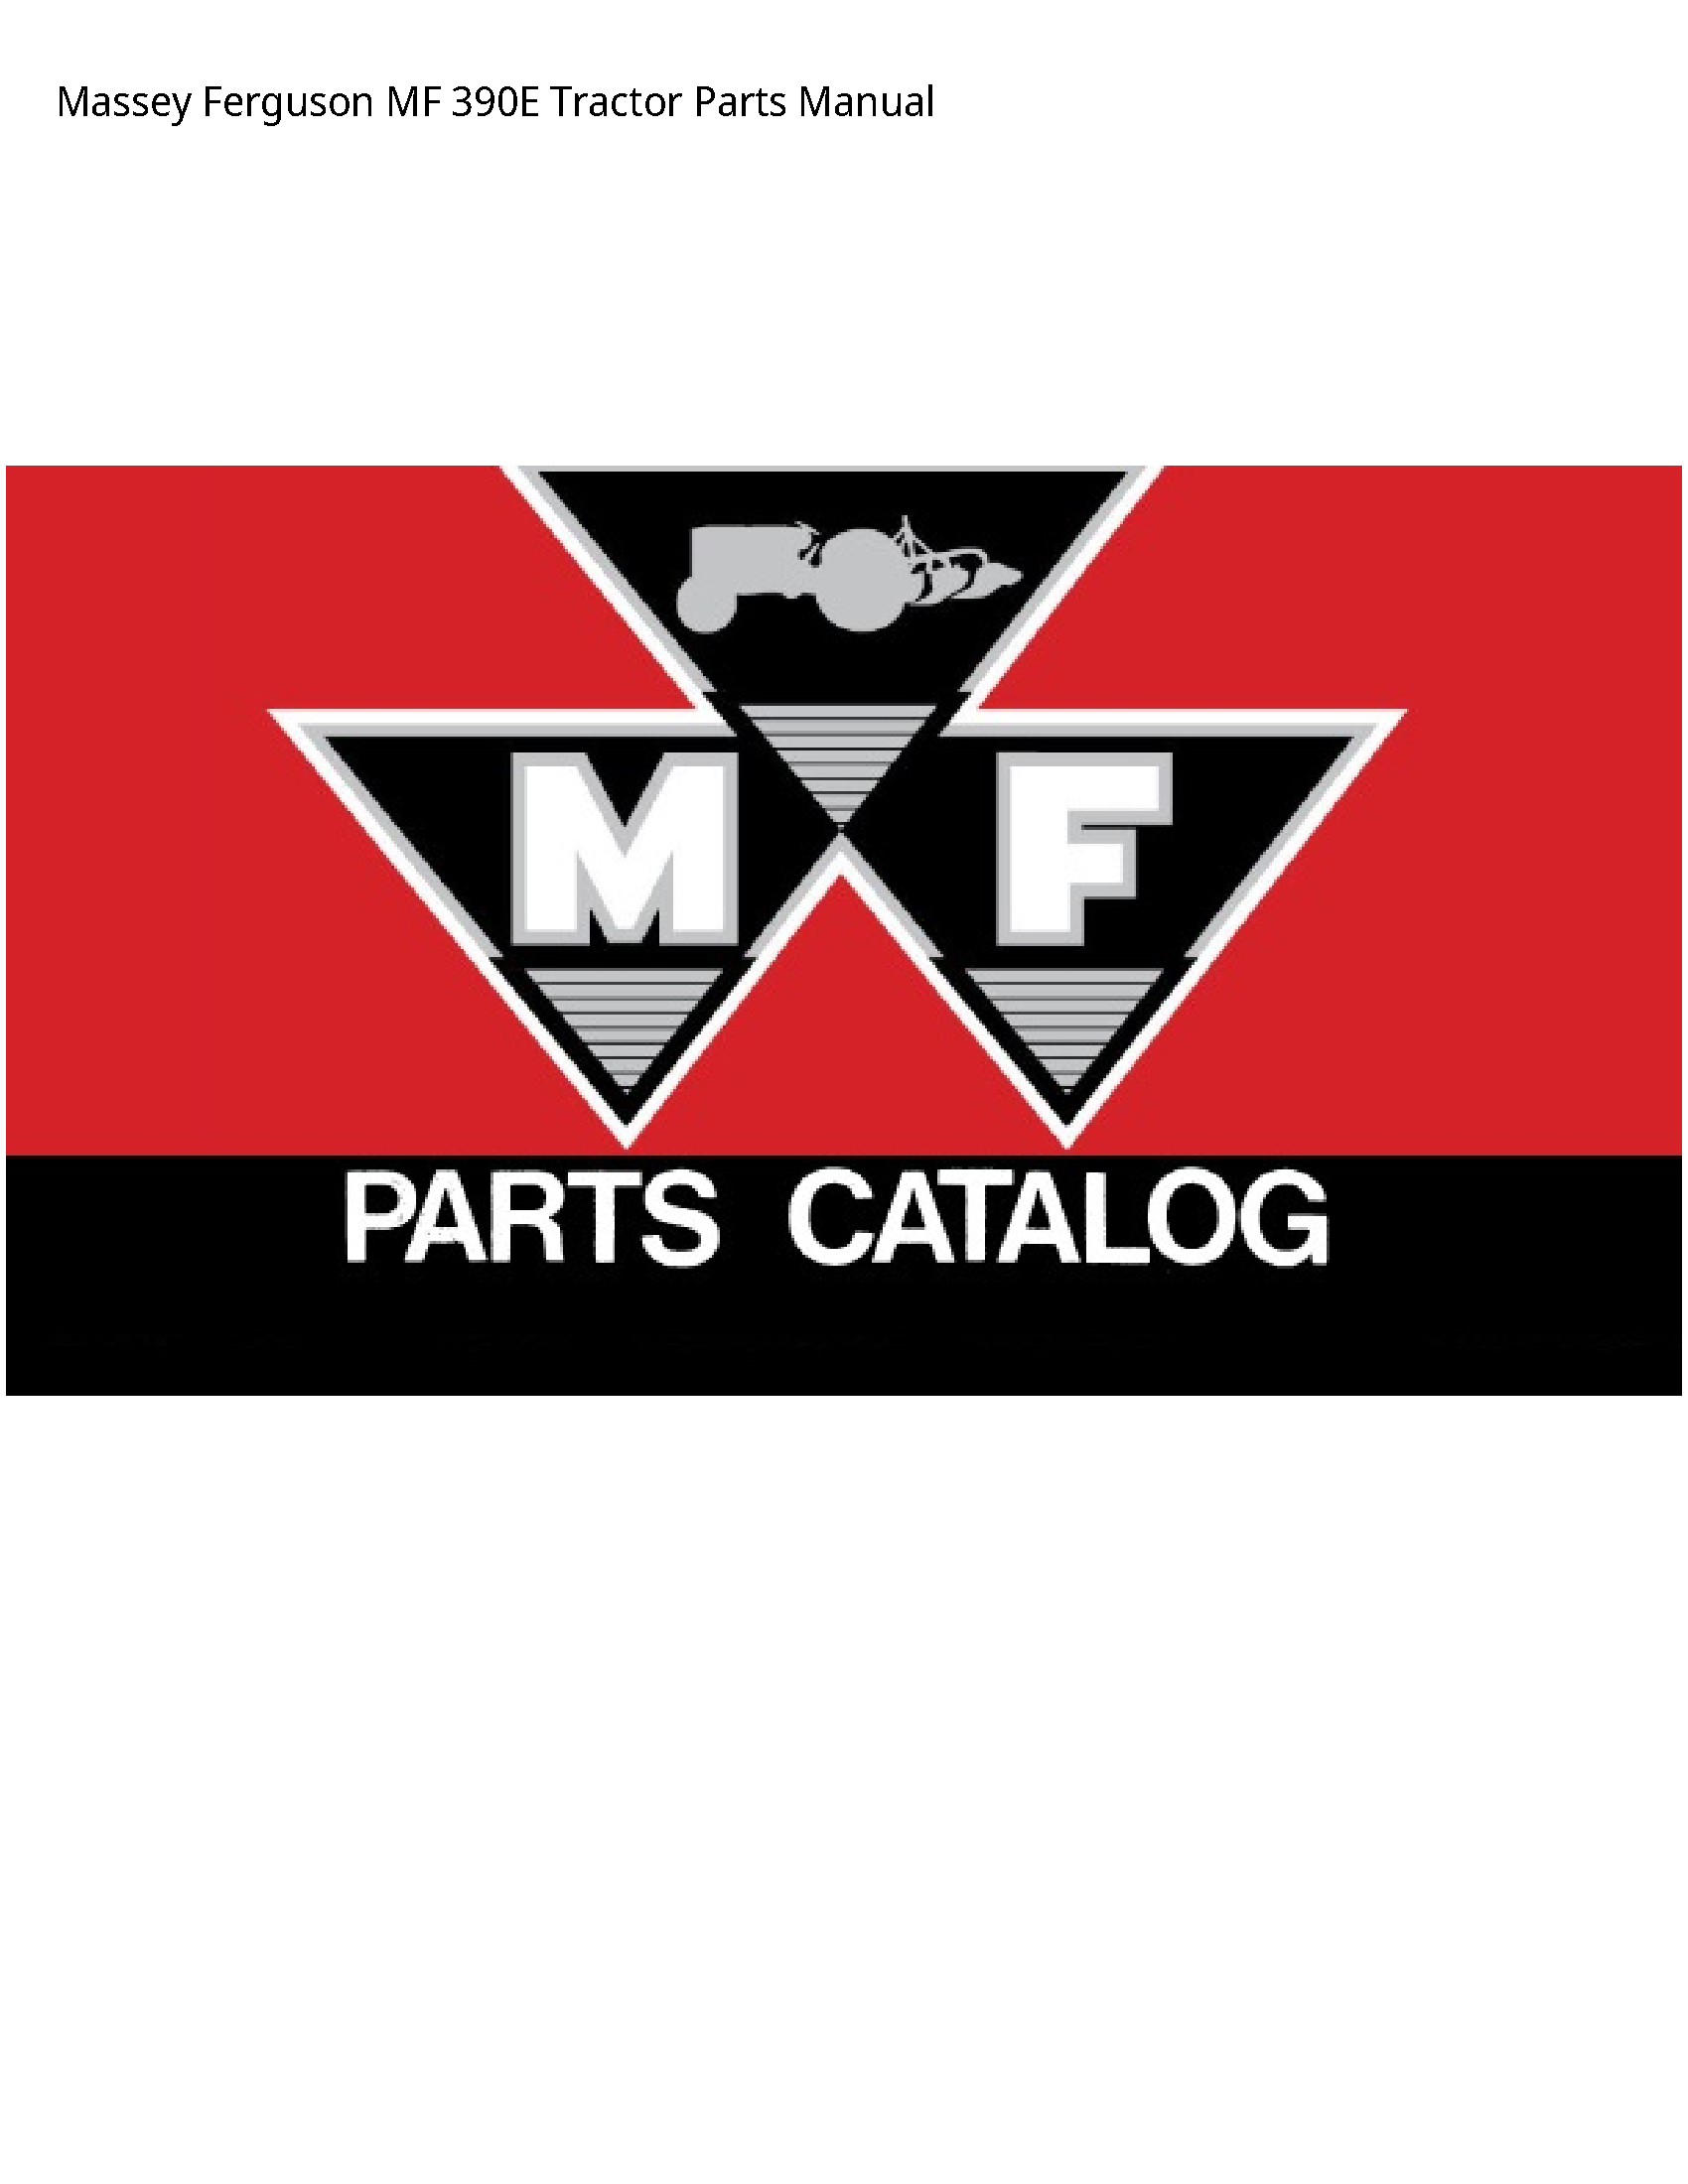 Massey Ferguson 390E MF Tractor Parts manual